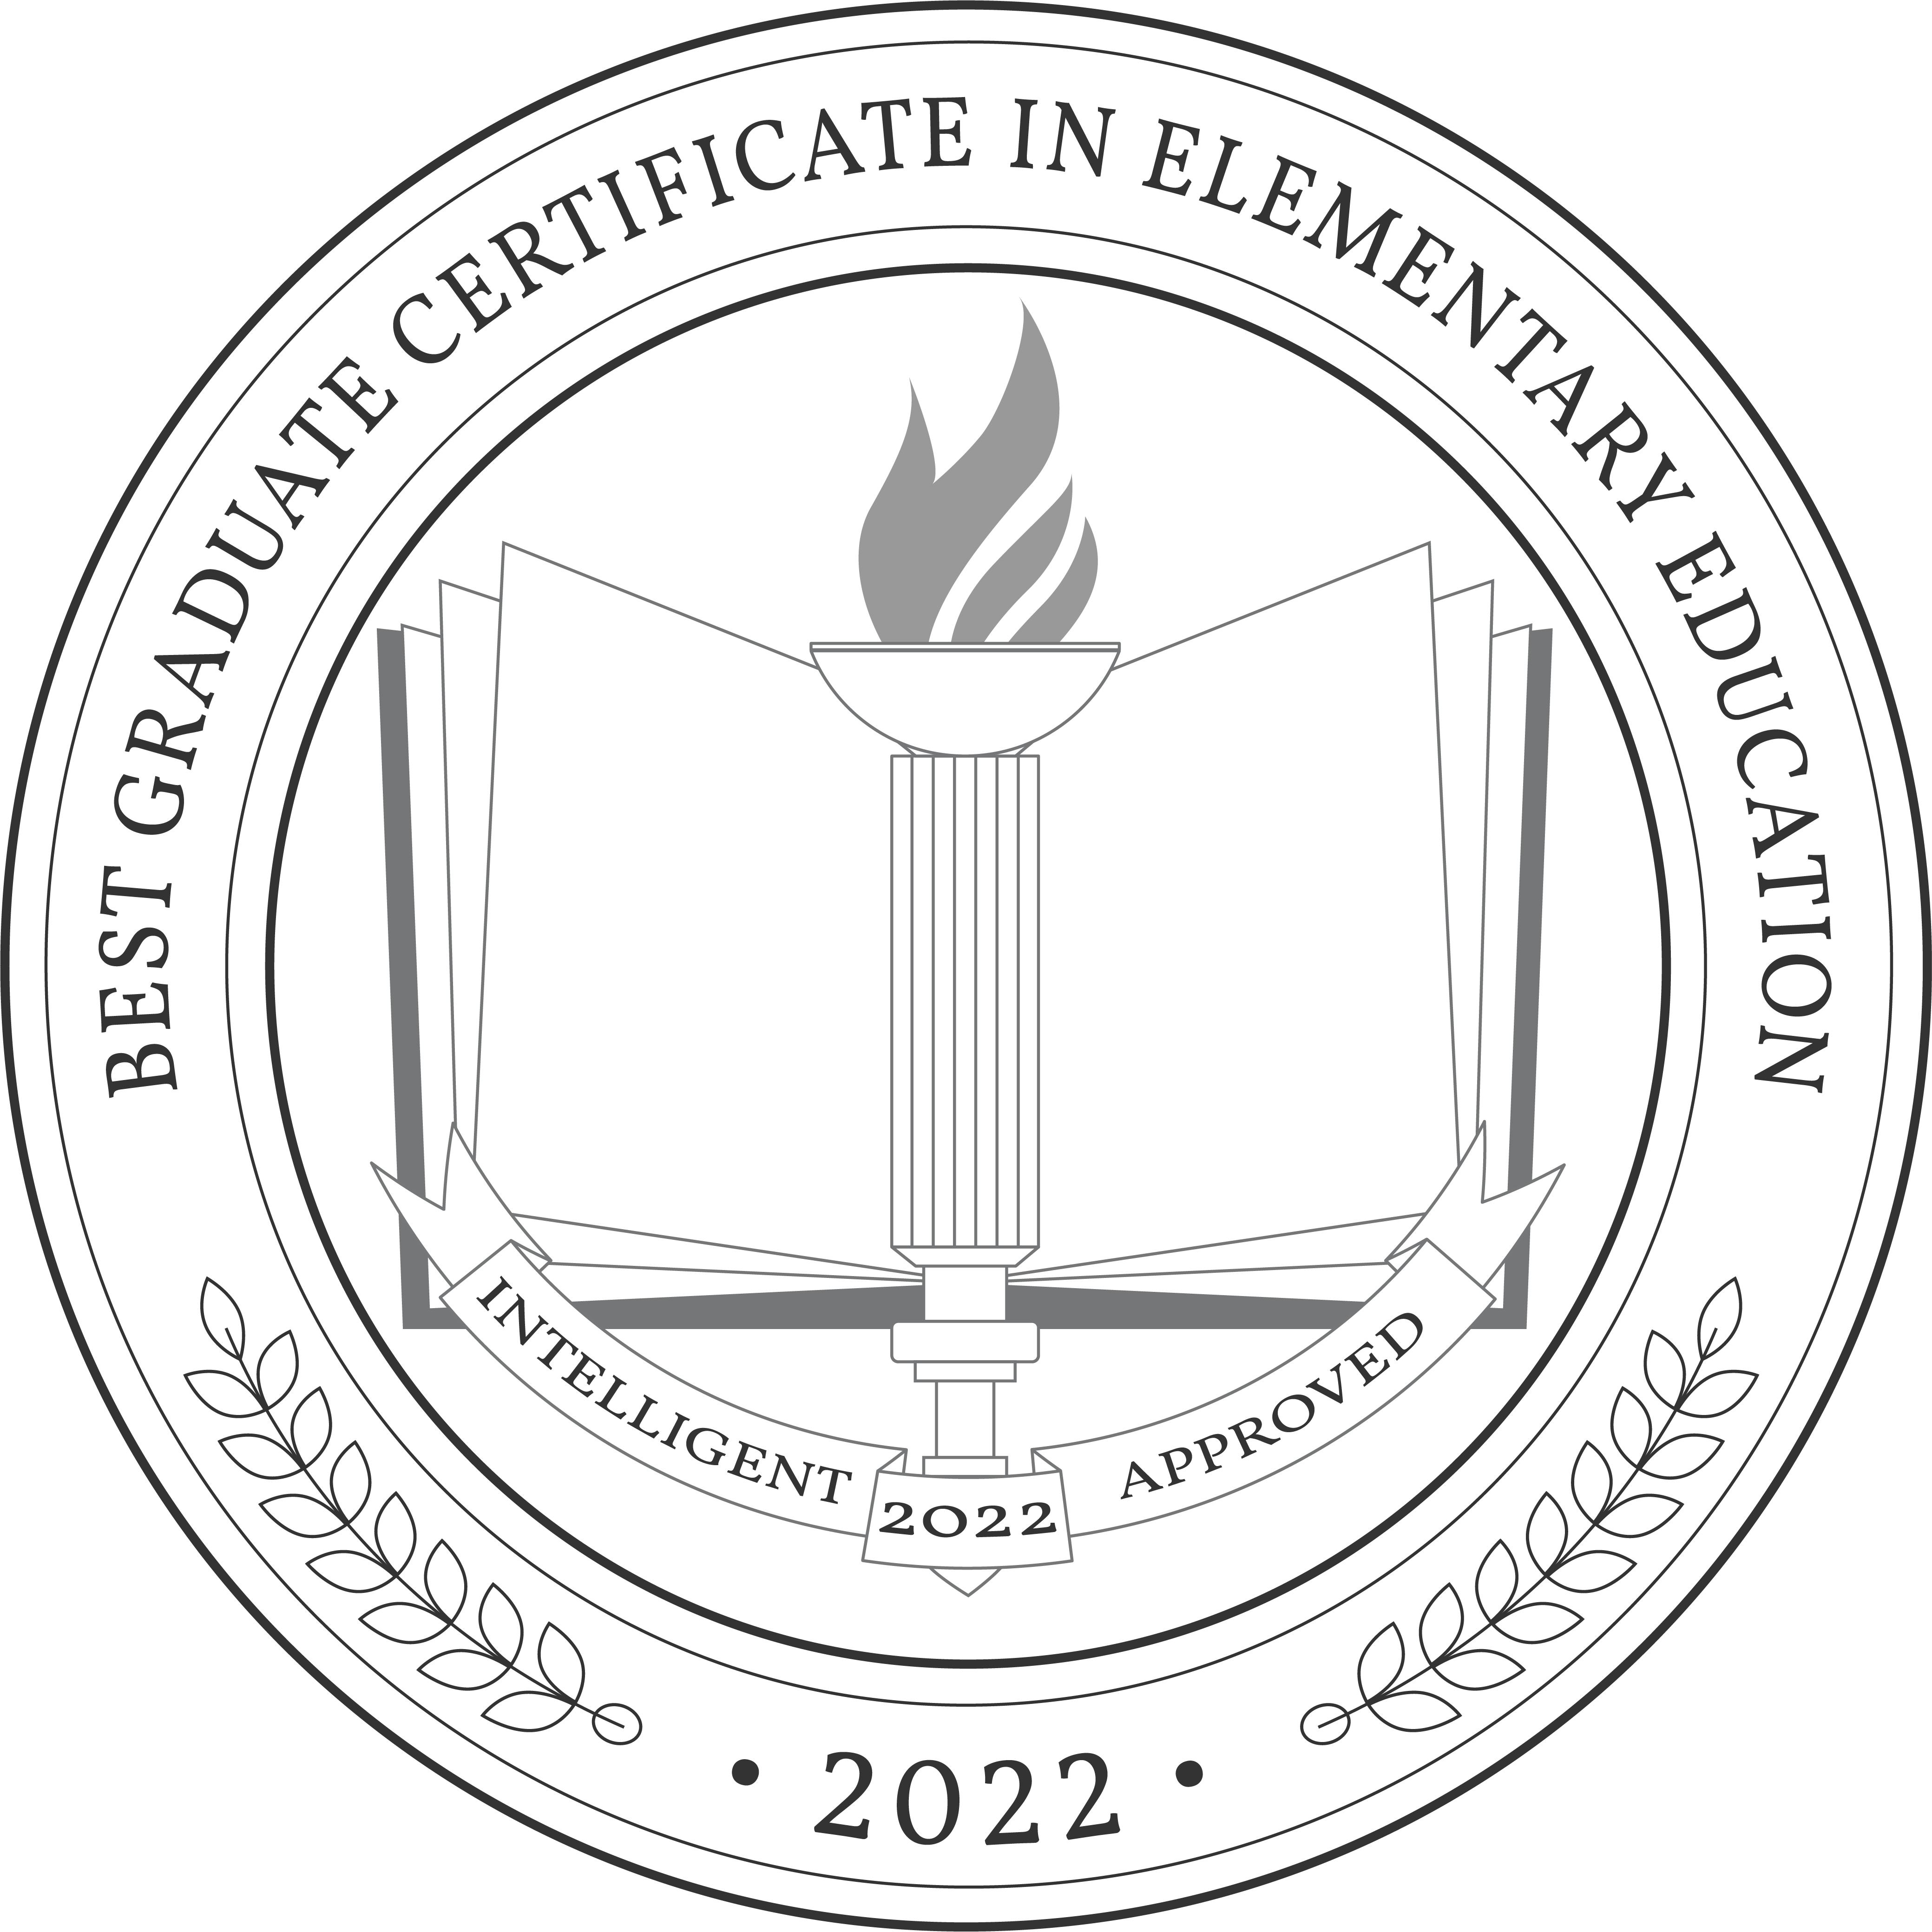 Best Graduate Certificate in Elementary Education Badge